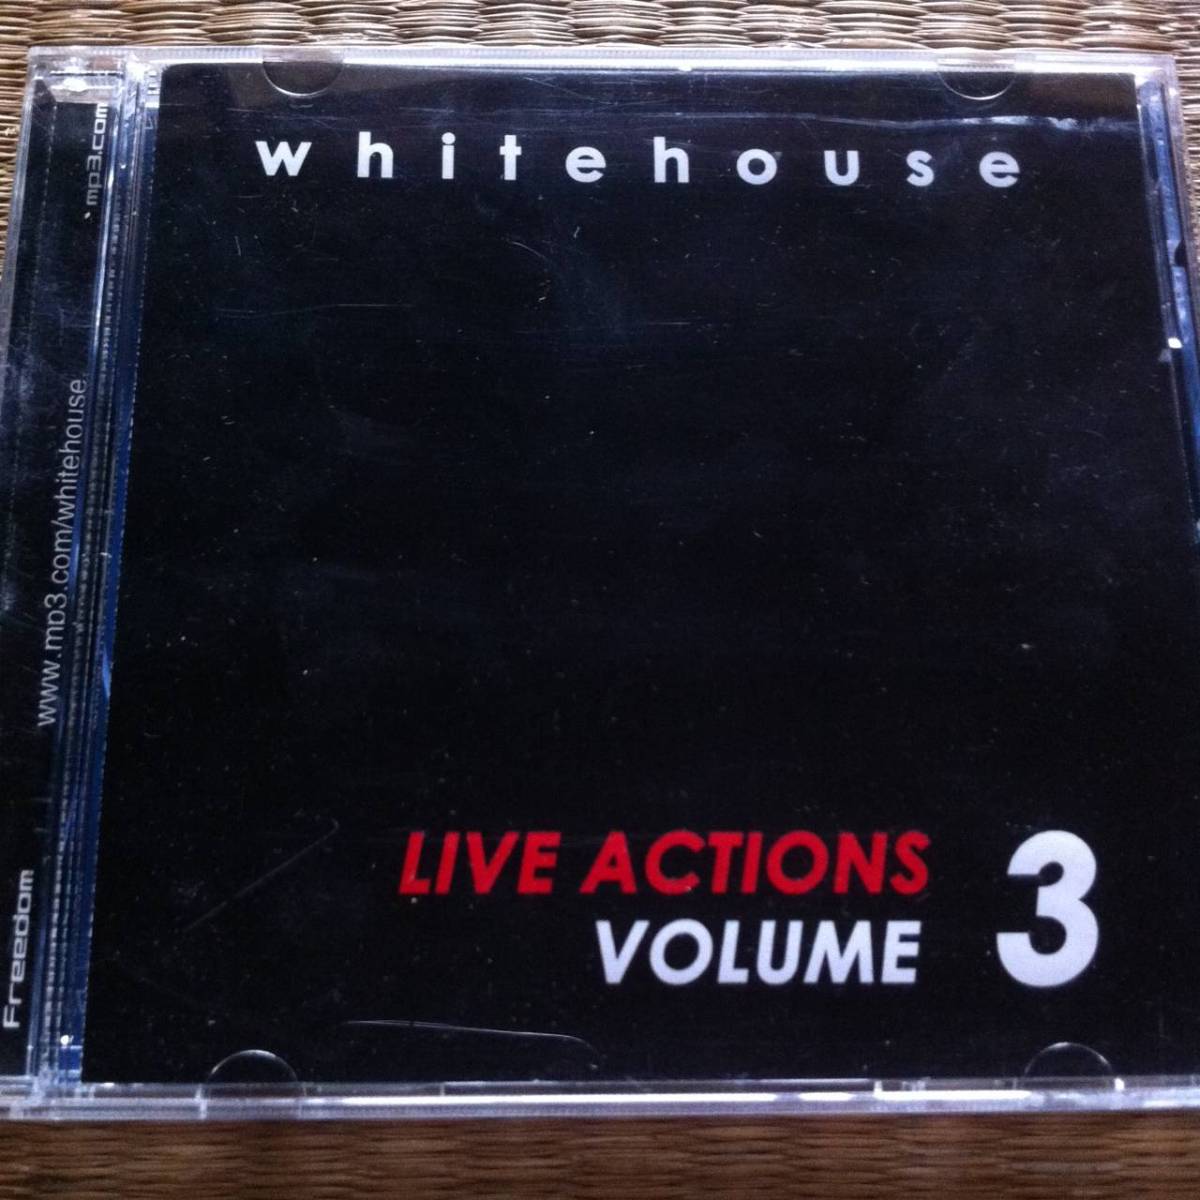 [Whitehouse / Live Actions Volume 3]CD бесплатная доставка Cut Hands, Consumer Electronics, Ramleh